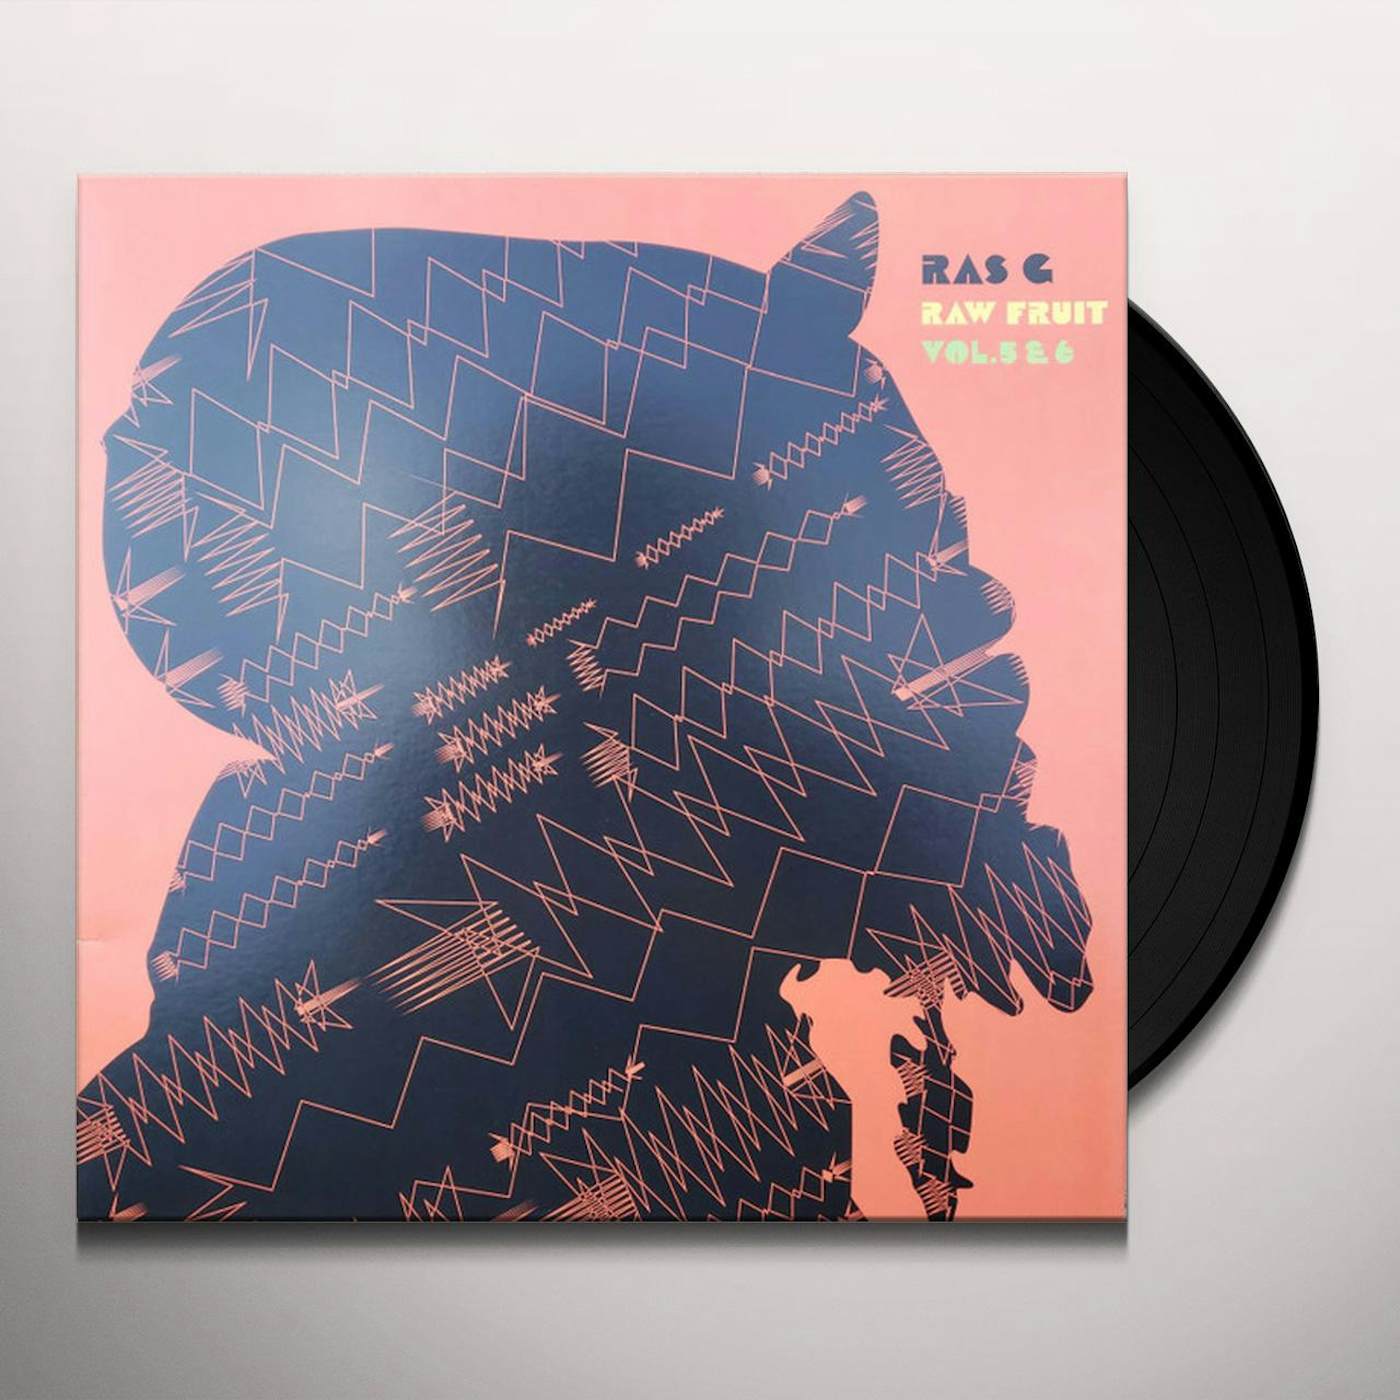 Ras G RAW FRUIT VOL. 5-6 Vinyl Record